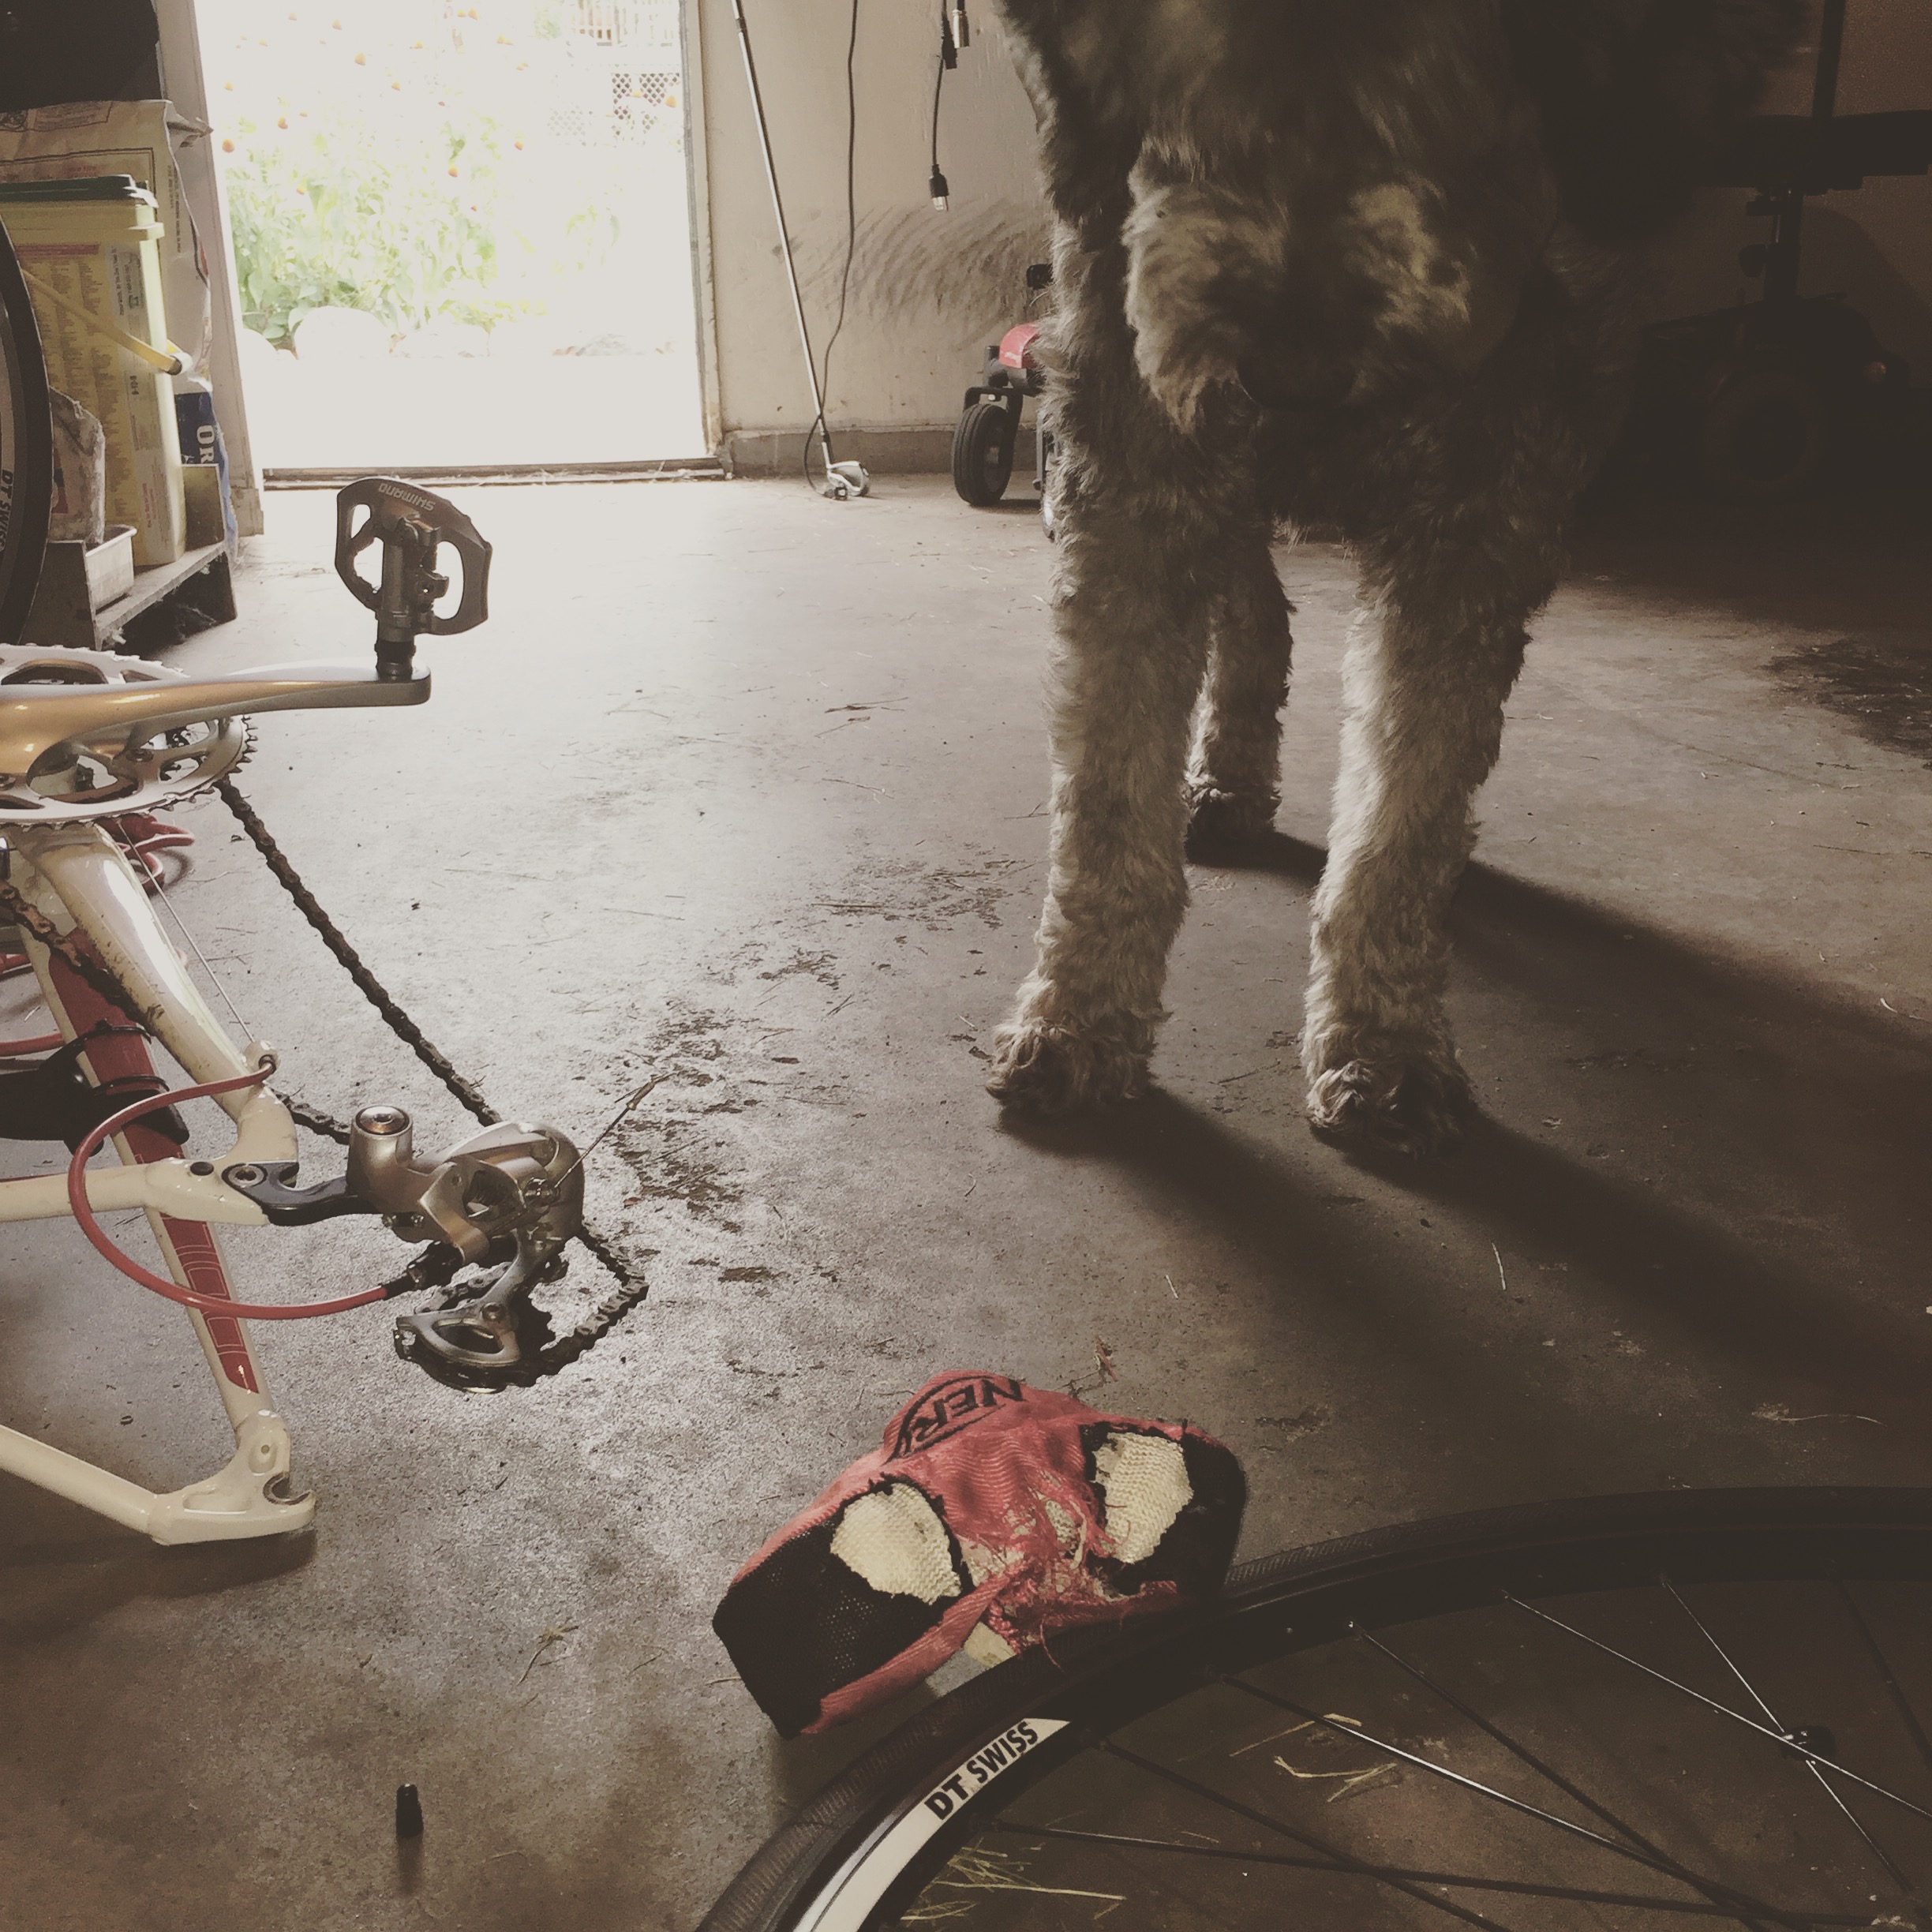 dog helps "fix" flat tire